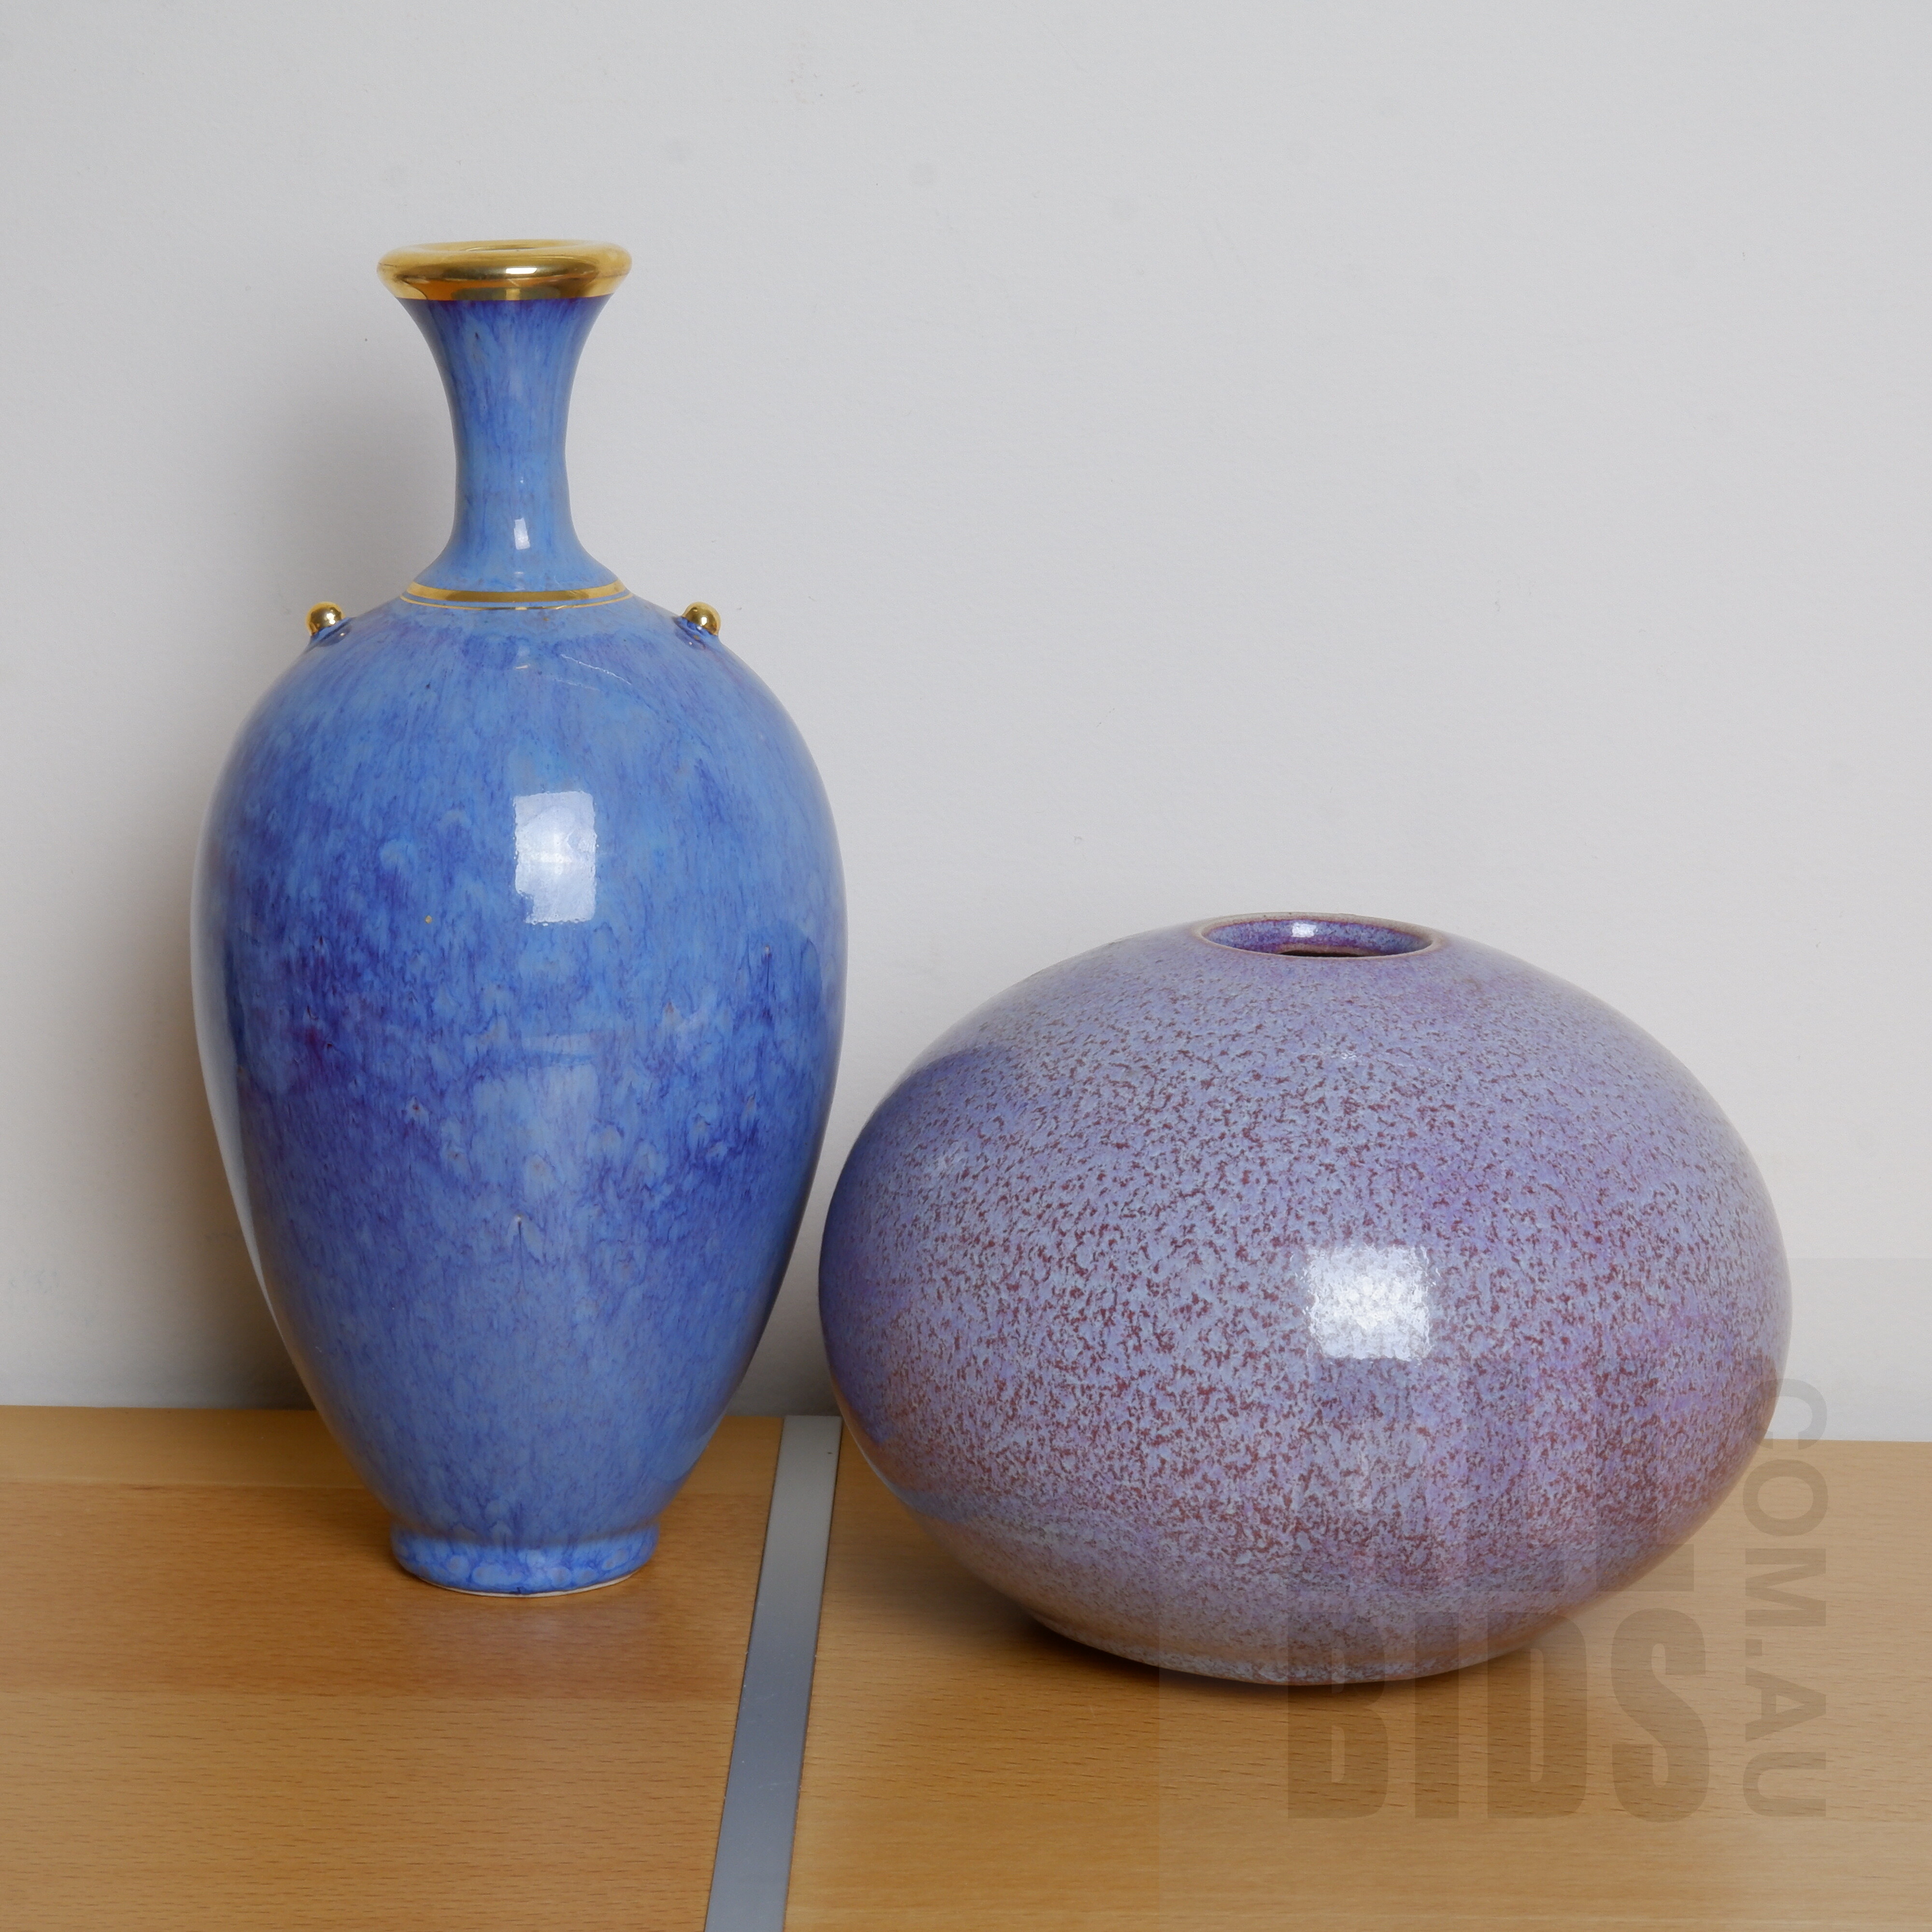 'David Oswald Glazed Ceramic Vase with Another Australian Studio Ceramic Vase'